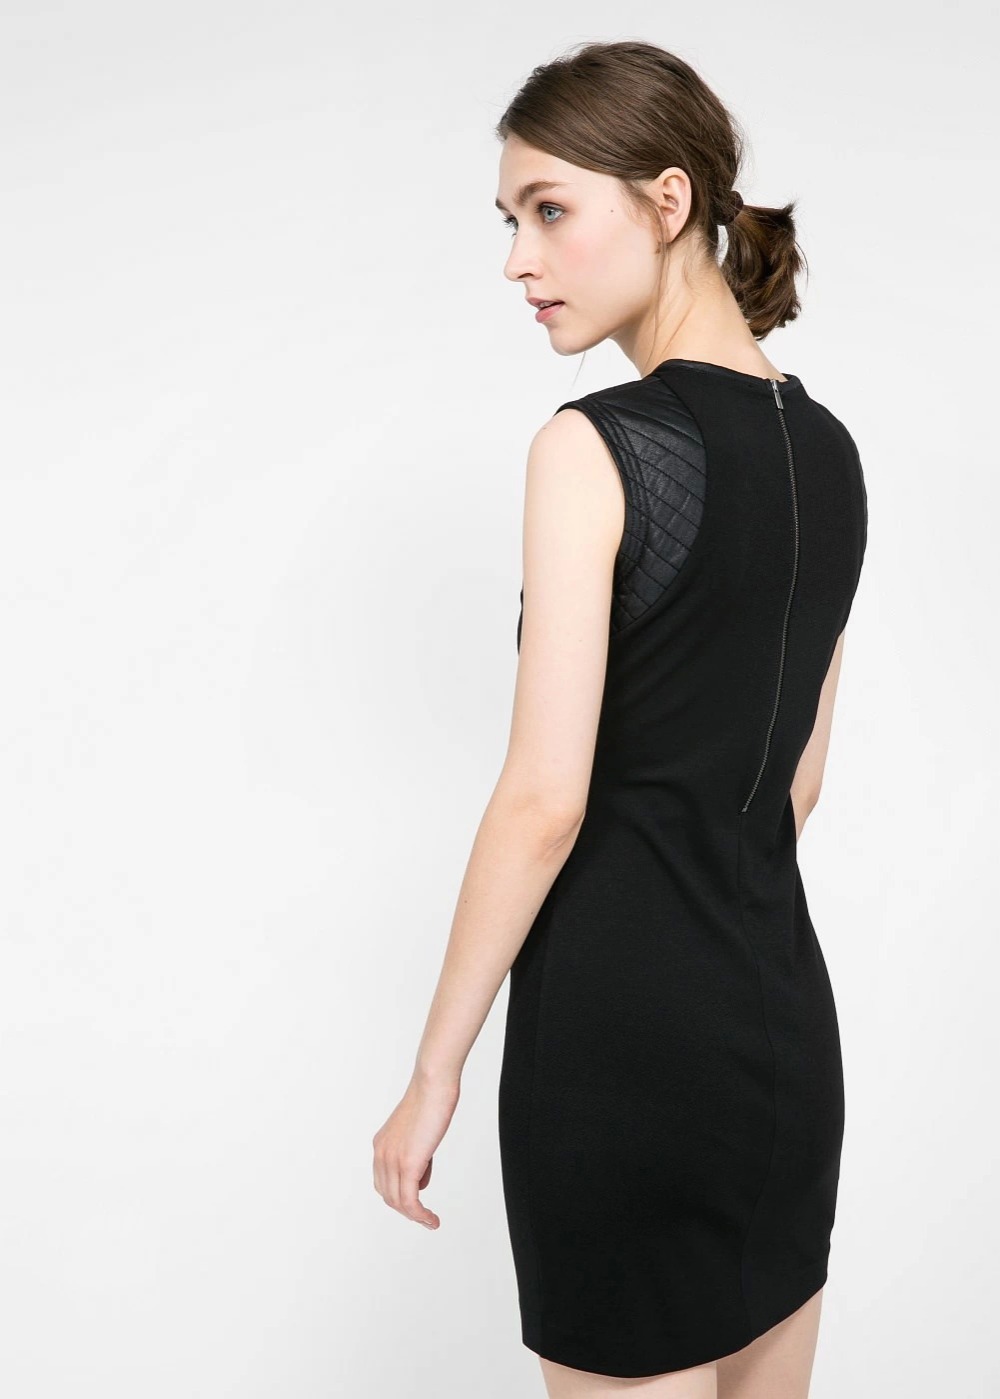 Fashion women vintage elegant zipper black Dress sexy sleeveless o neck causal slim brand dress  04LJ52